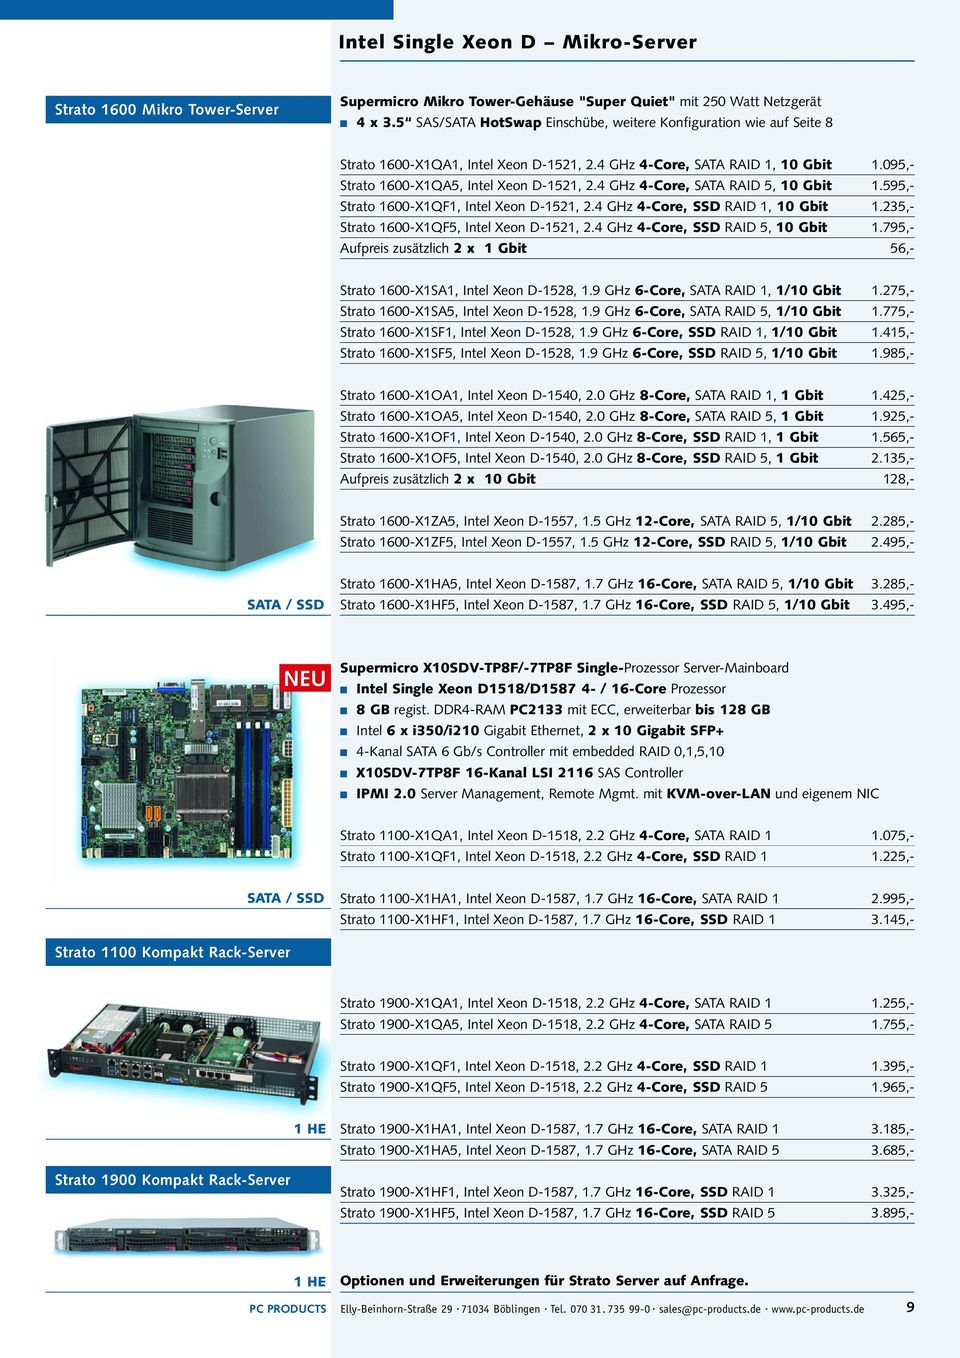 4 GHz 4-Core, SATA RAID 5, 10 Gbit 1.595,- Strato 1600-X1QF1, Intel Xeon D-1521, 2.4 GHz 4-Core, SSD RAID 1, 10 Gbit 1.235,- Strato 1600-X1QF5, Intel Xeon D-1521, 2.